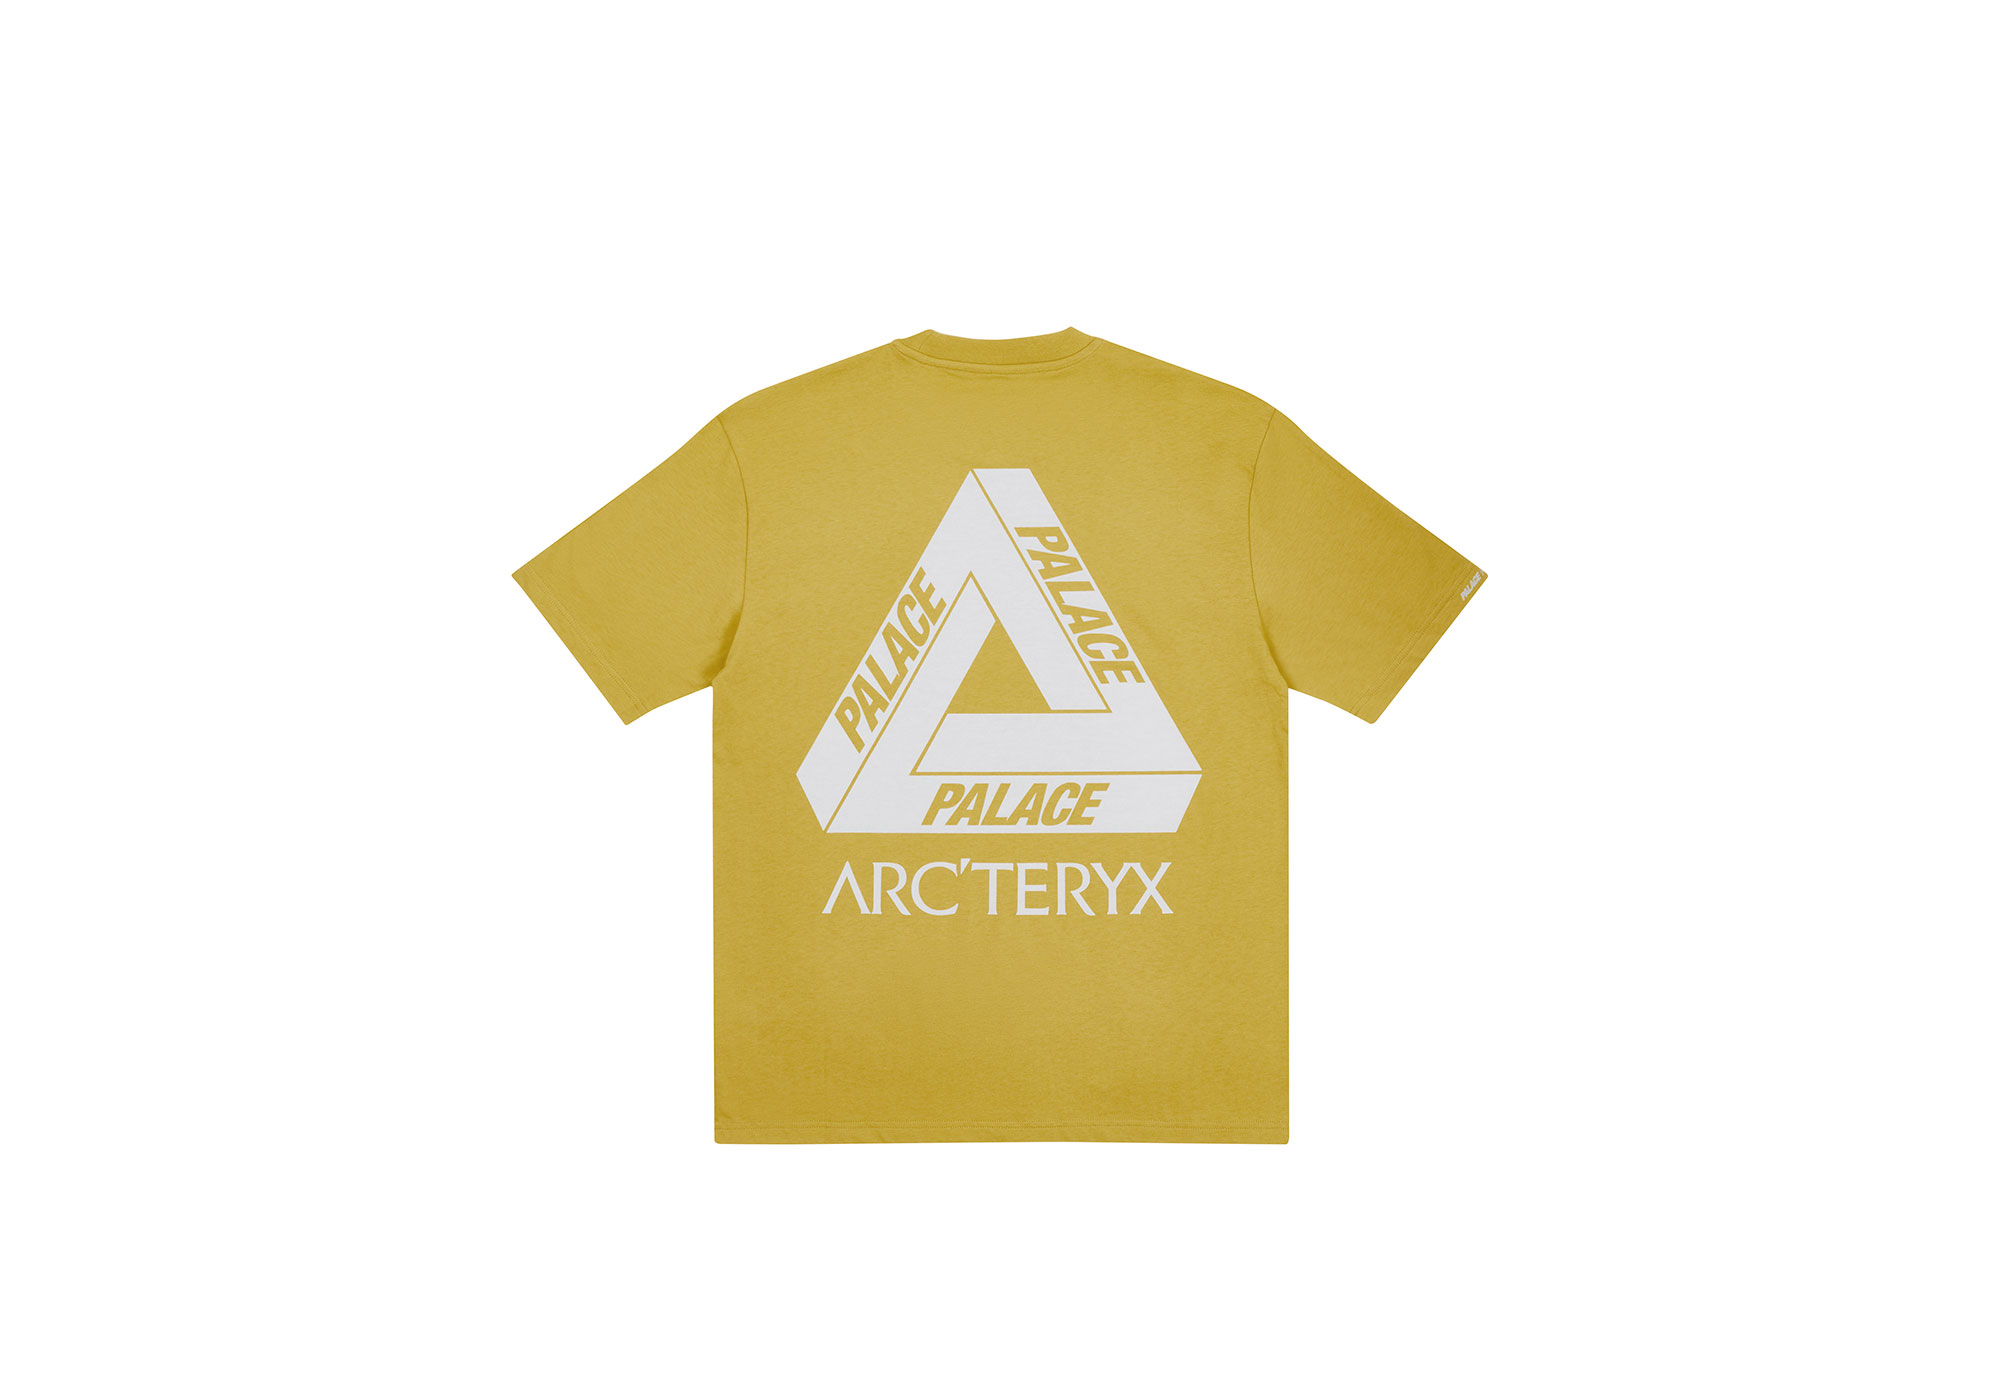 Arc'teryxとPalace Skateboardsがコラボコレクション発売 